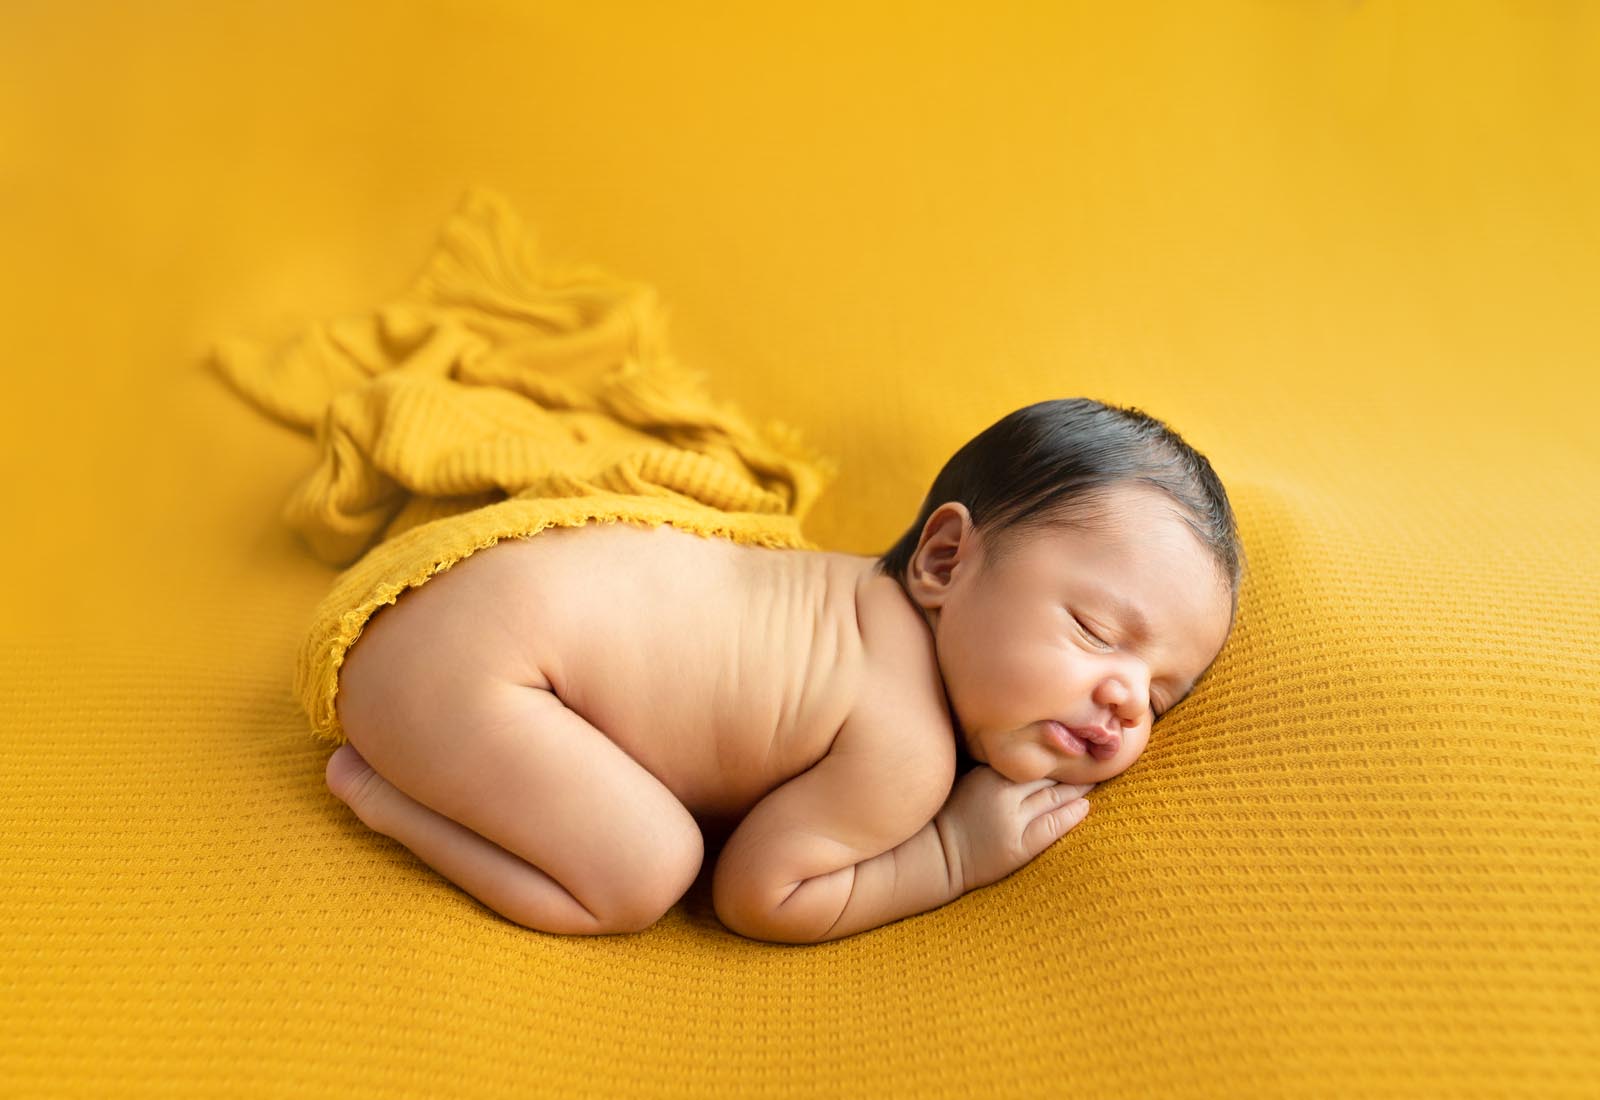 Best Baby Photoshoot in Bangalore